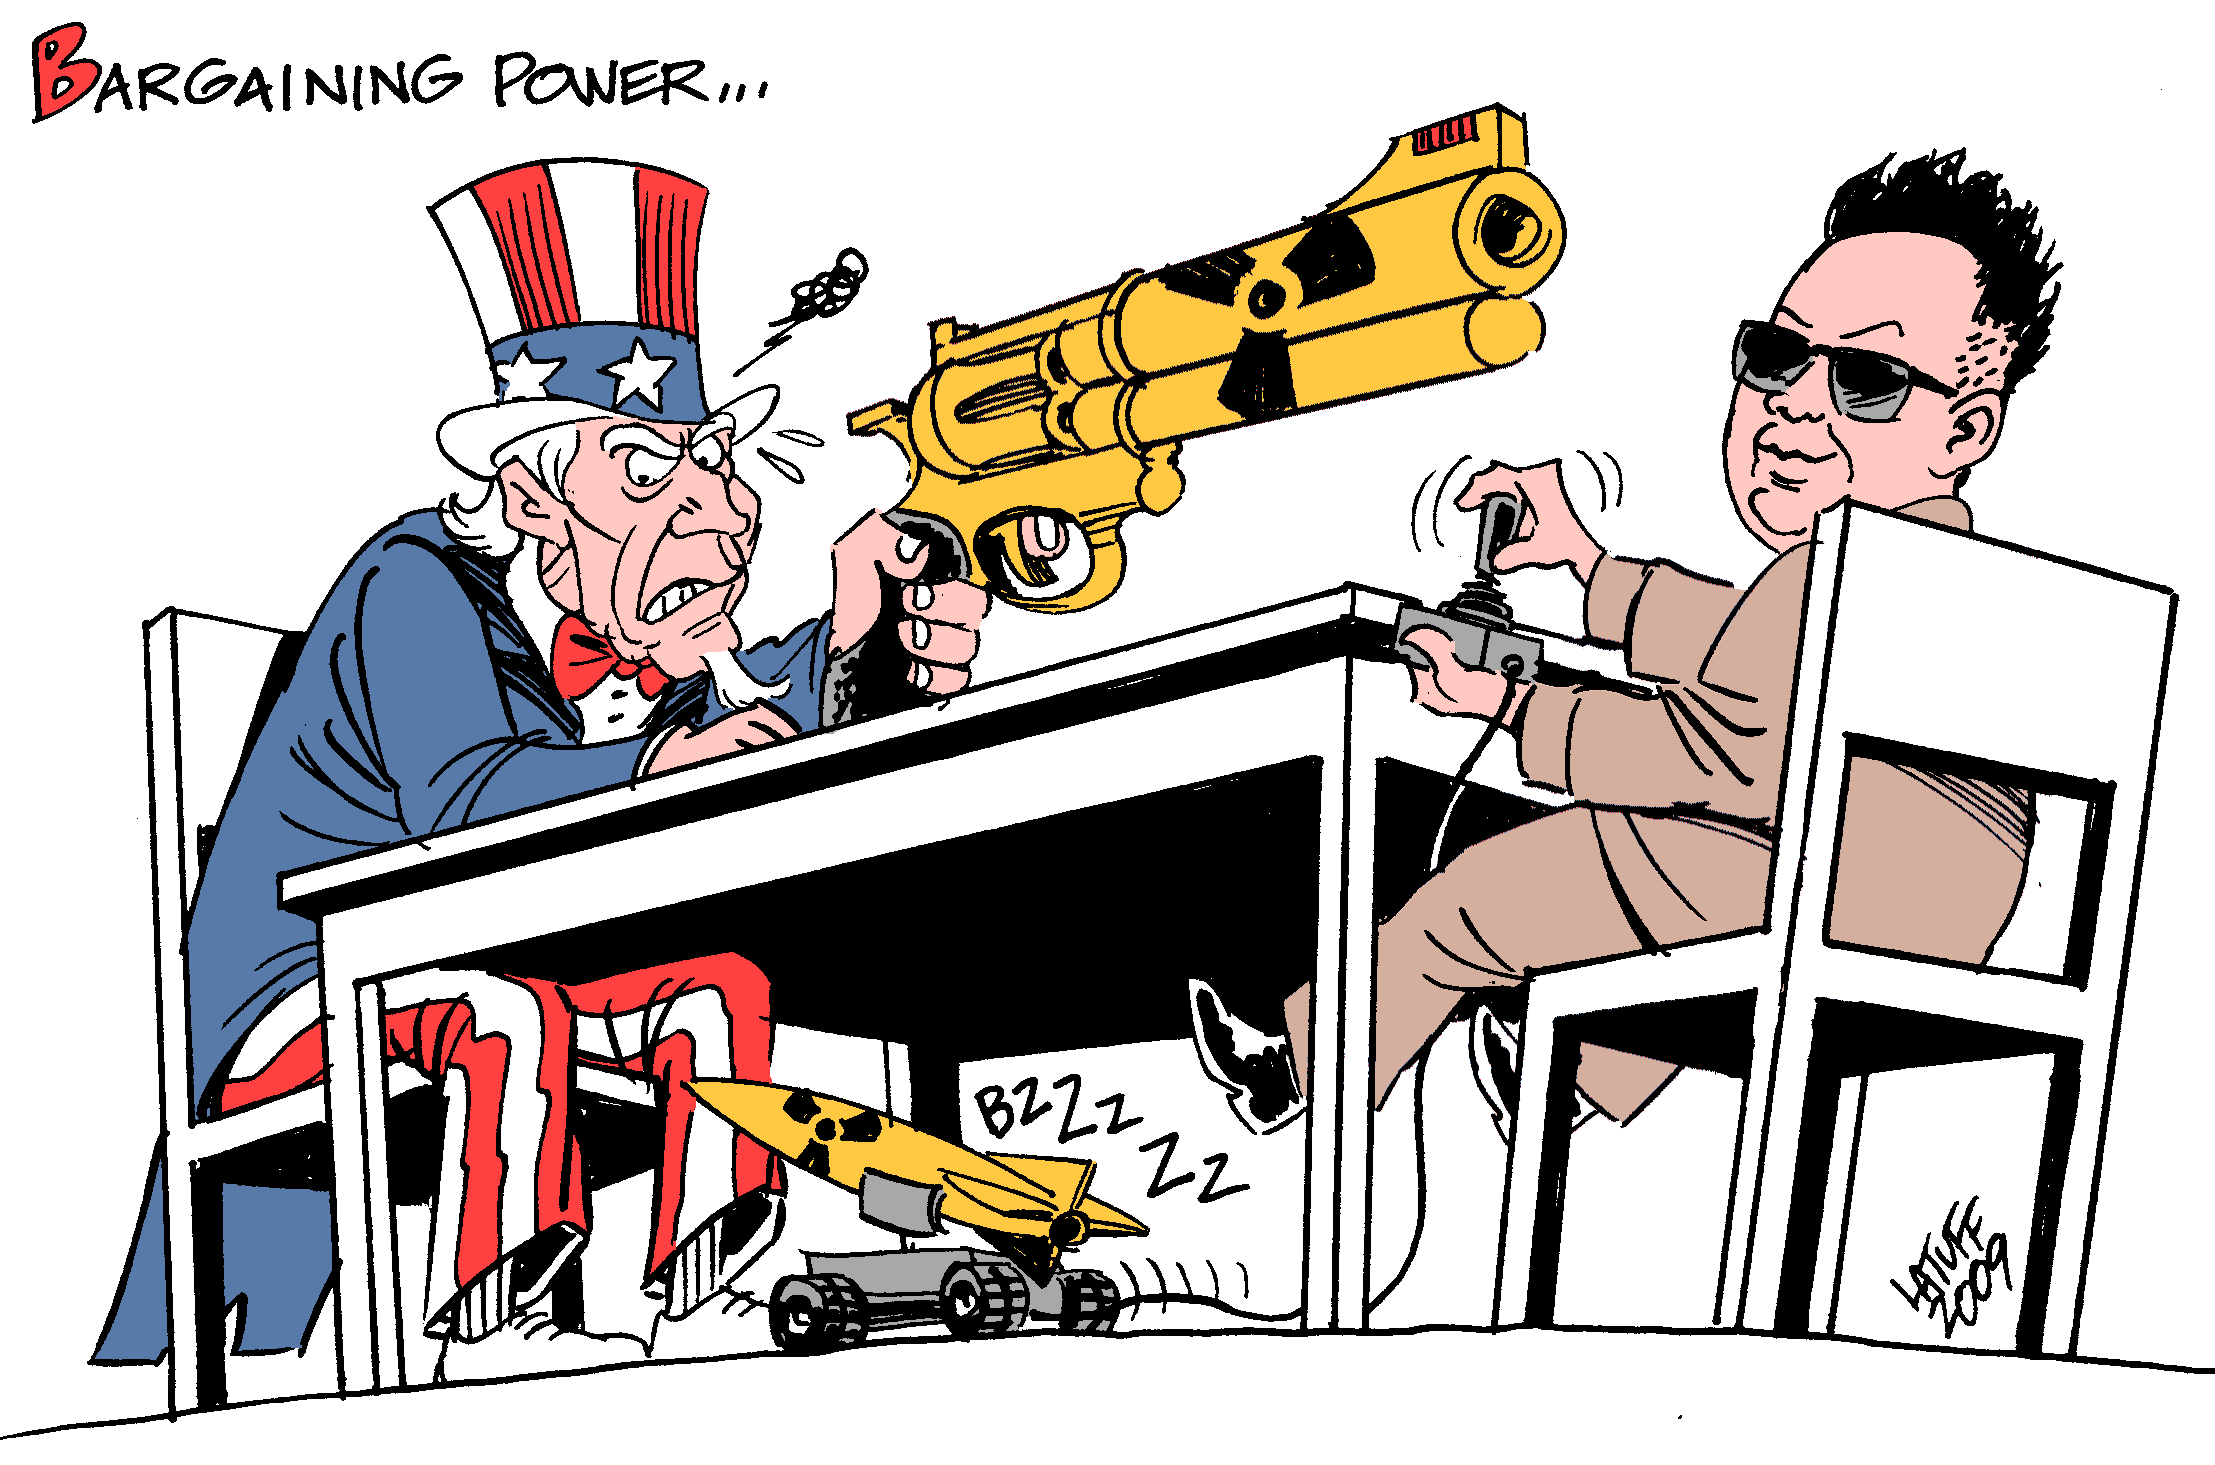 North Korea: Bargaining power (by Latuff) : Indybay